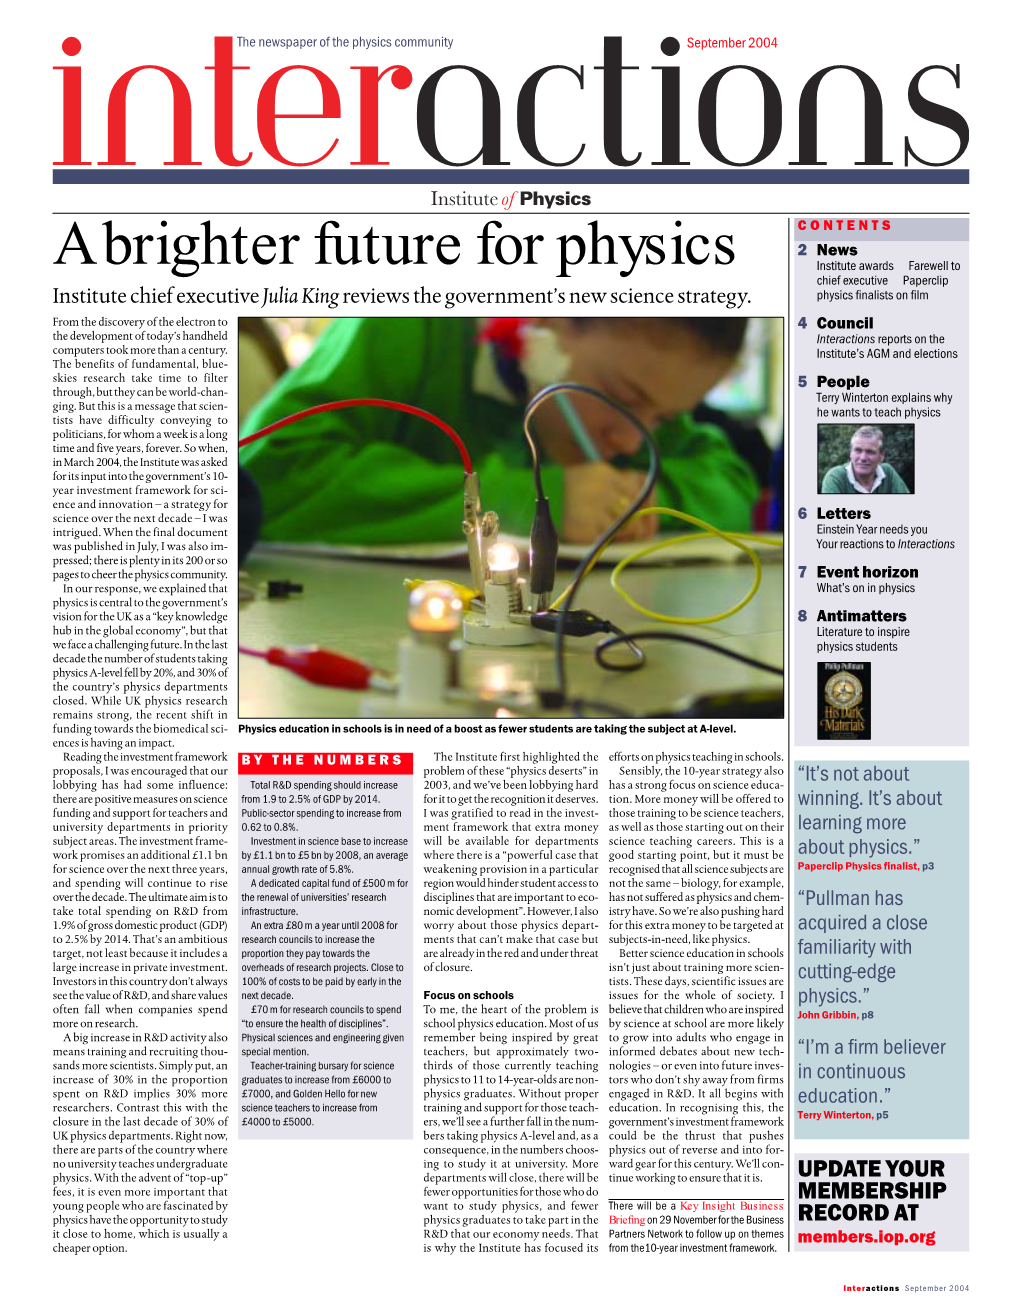 A Brighter Future for Physics